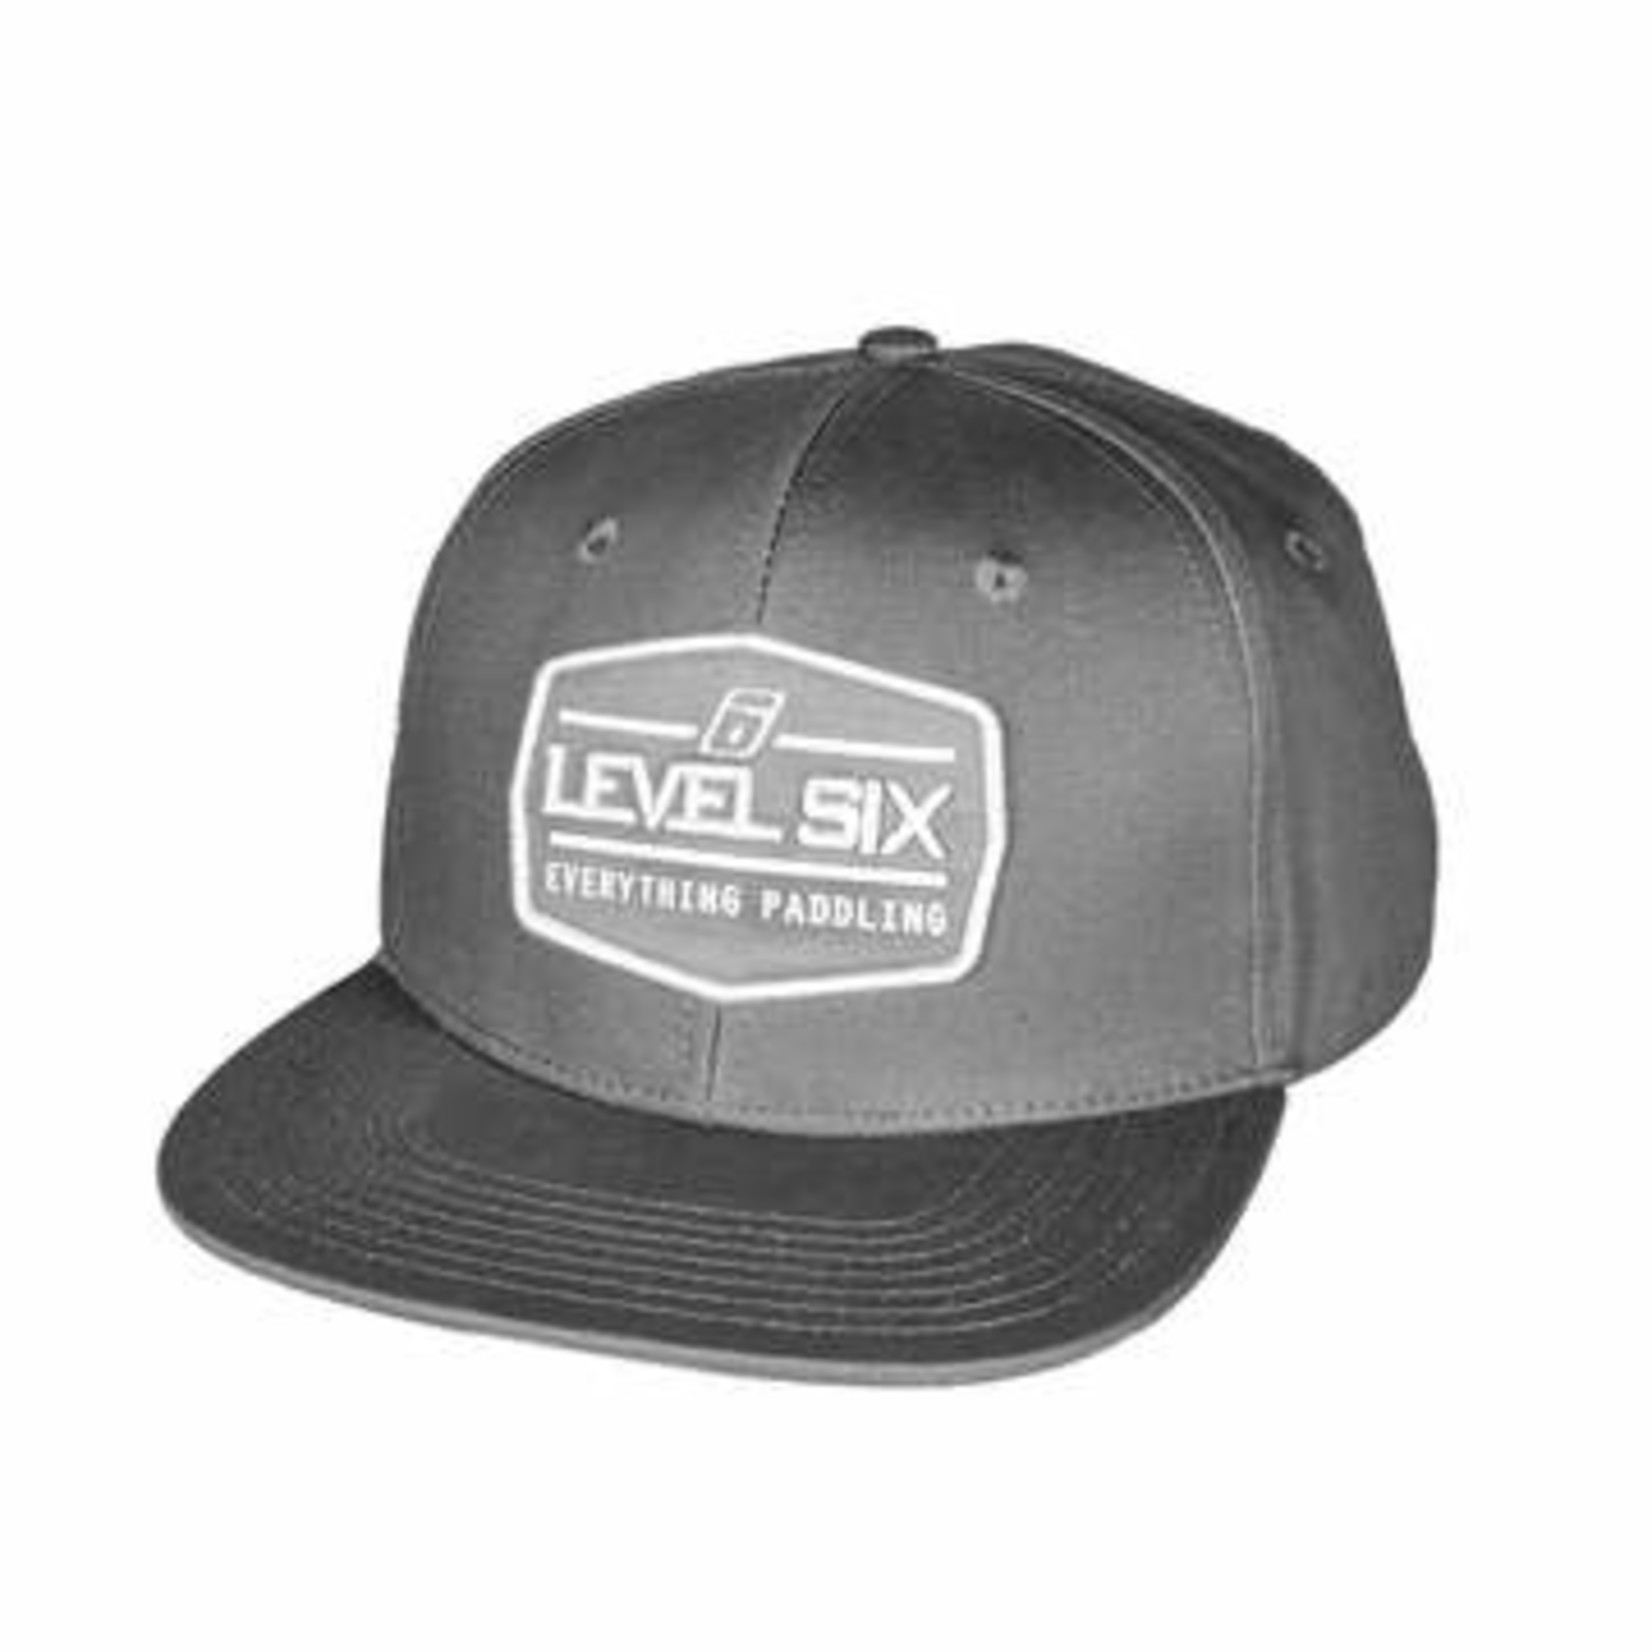 Level Six Level Six Badge Cotton Hat